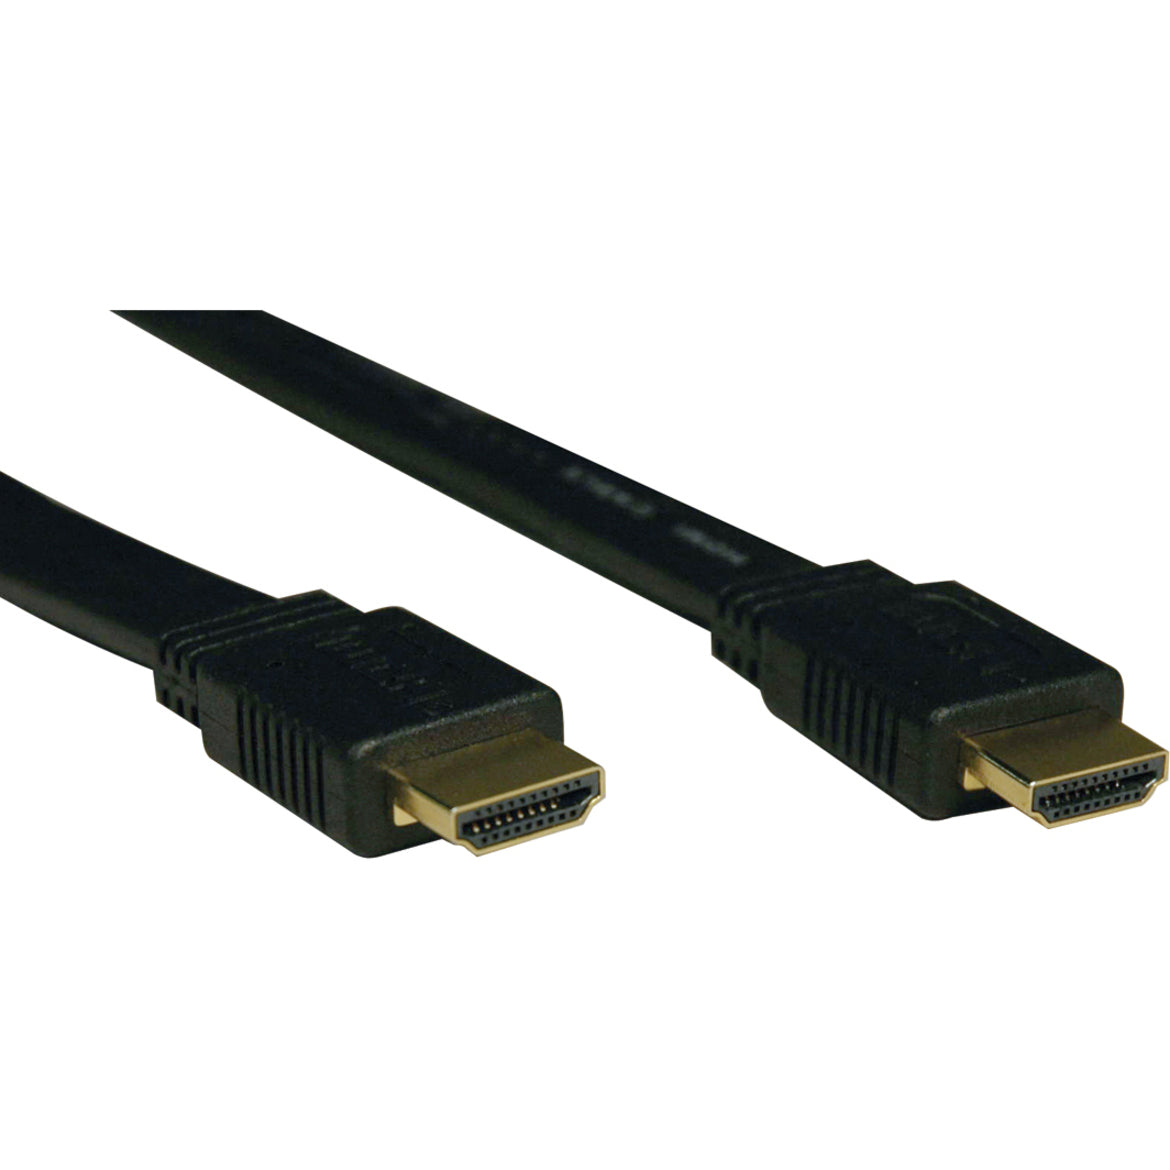 Tripp Lite P568-016-FL Flat HDMI Gold Digital Video Cable, 16ft High Speed, 4K x 2K, Lifetime Warranty